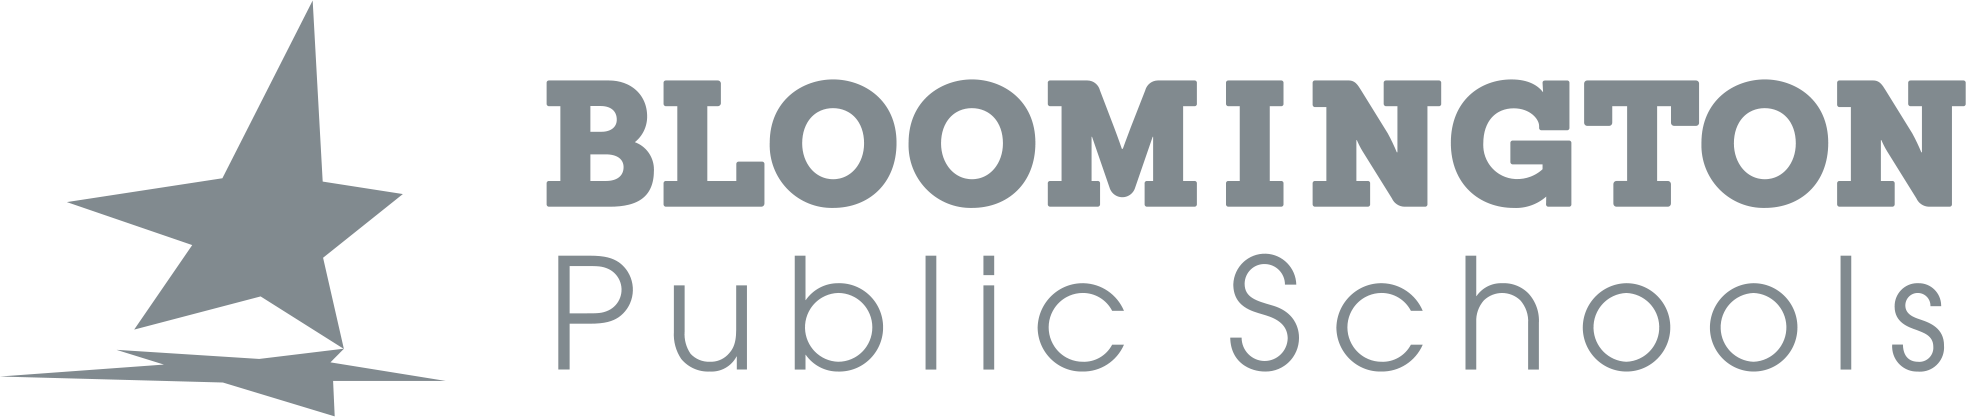 Bloomington Public Schools logo monochrome